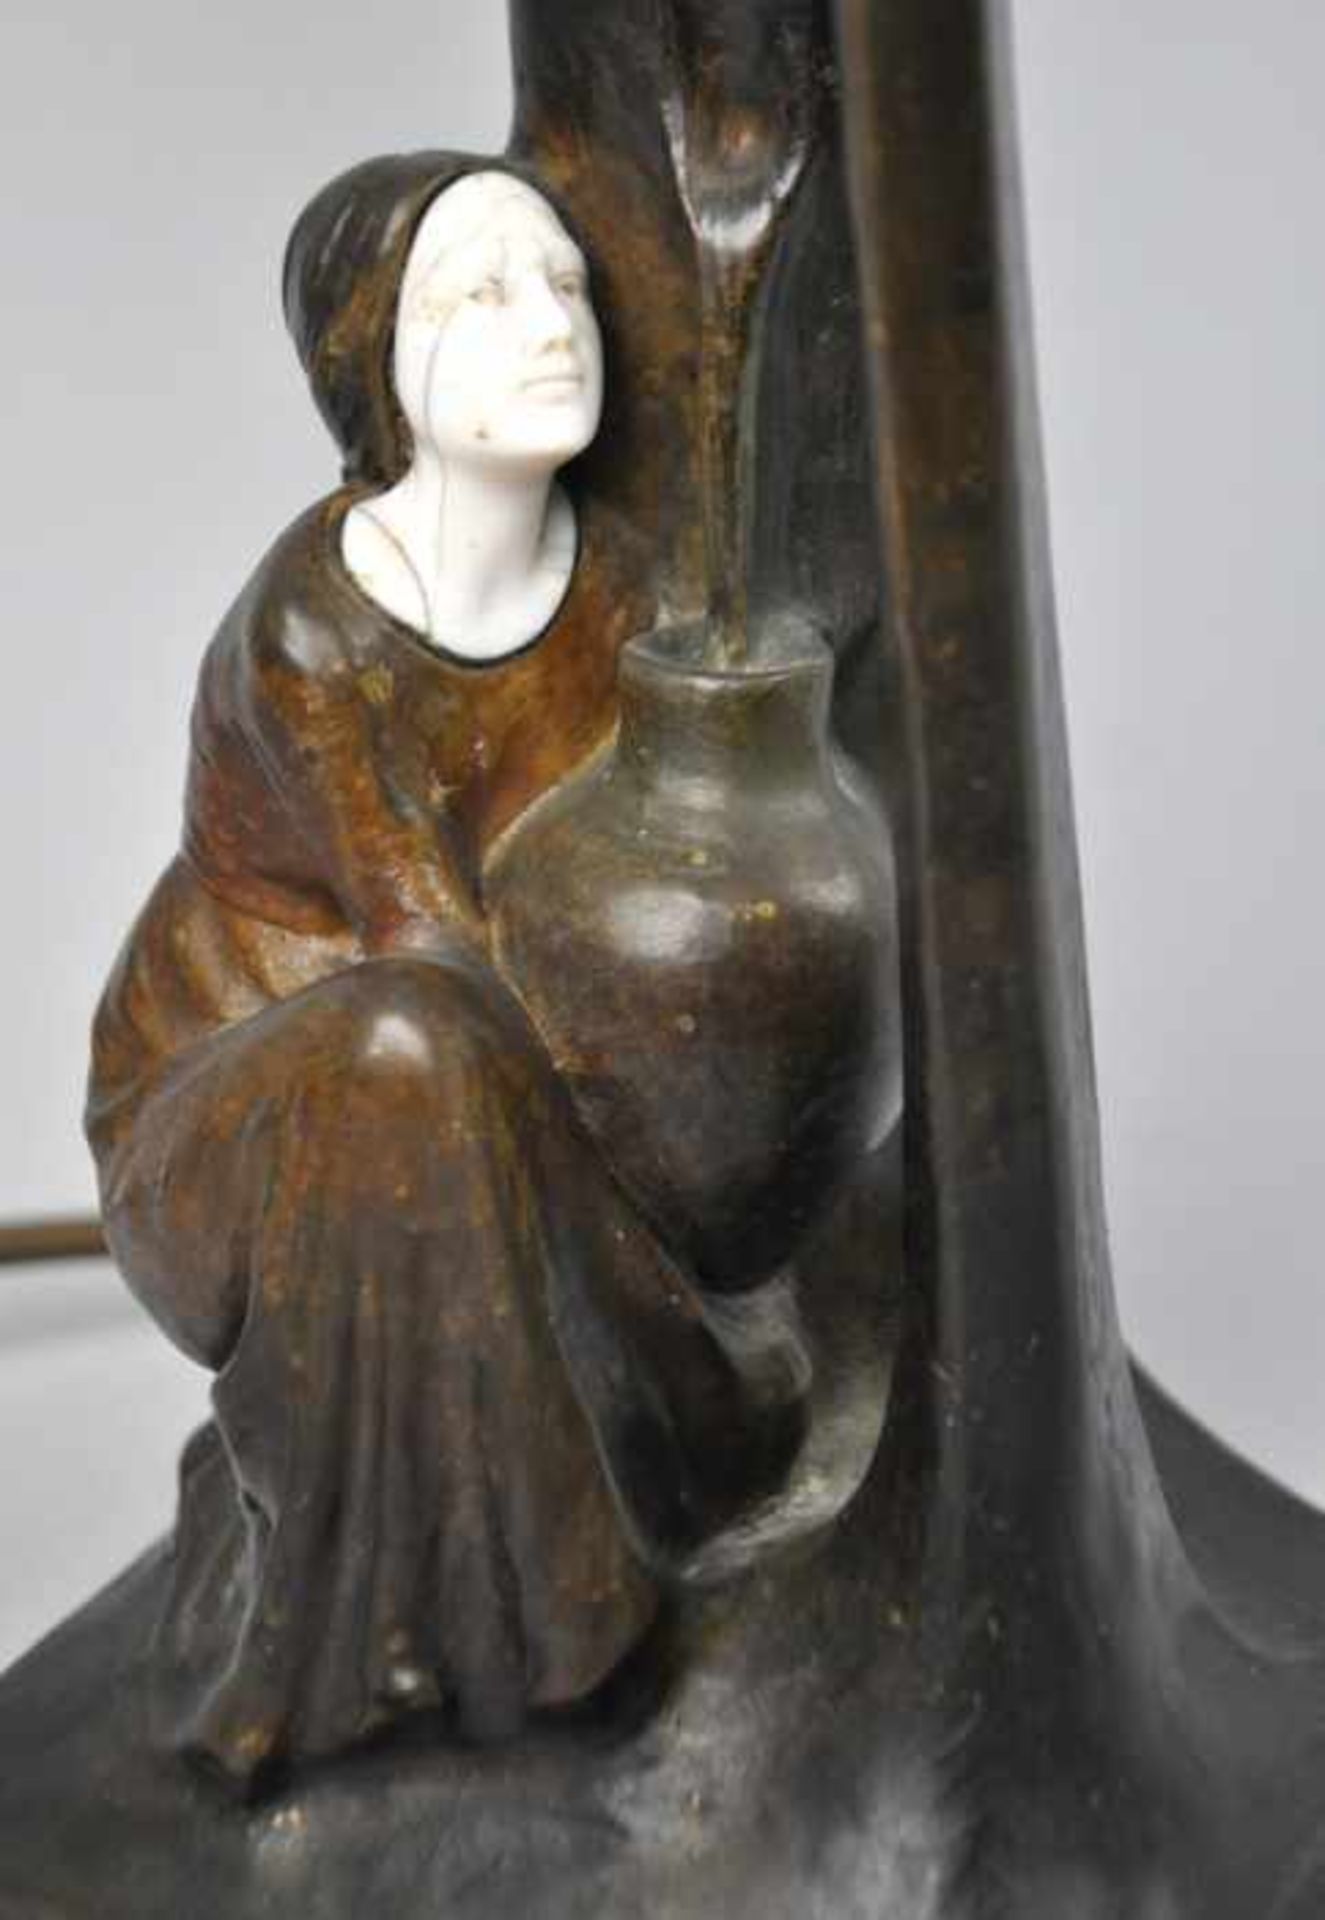 TERESZCZUK Peter (1875 Wybudow - 1963 Wien) Tischlampe mit sitzender Dame, Jugendstil, um 1900, - Image 3 of 4